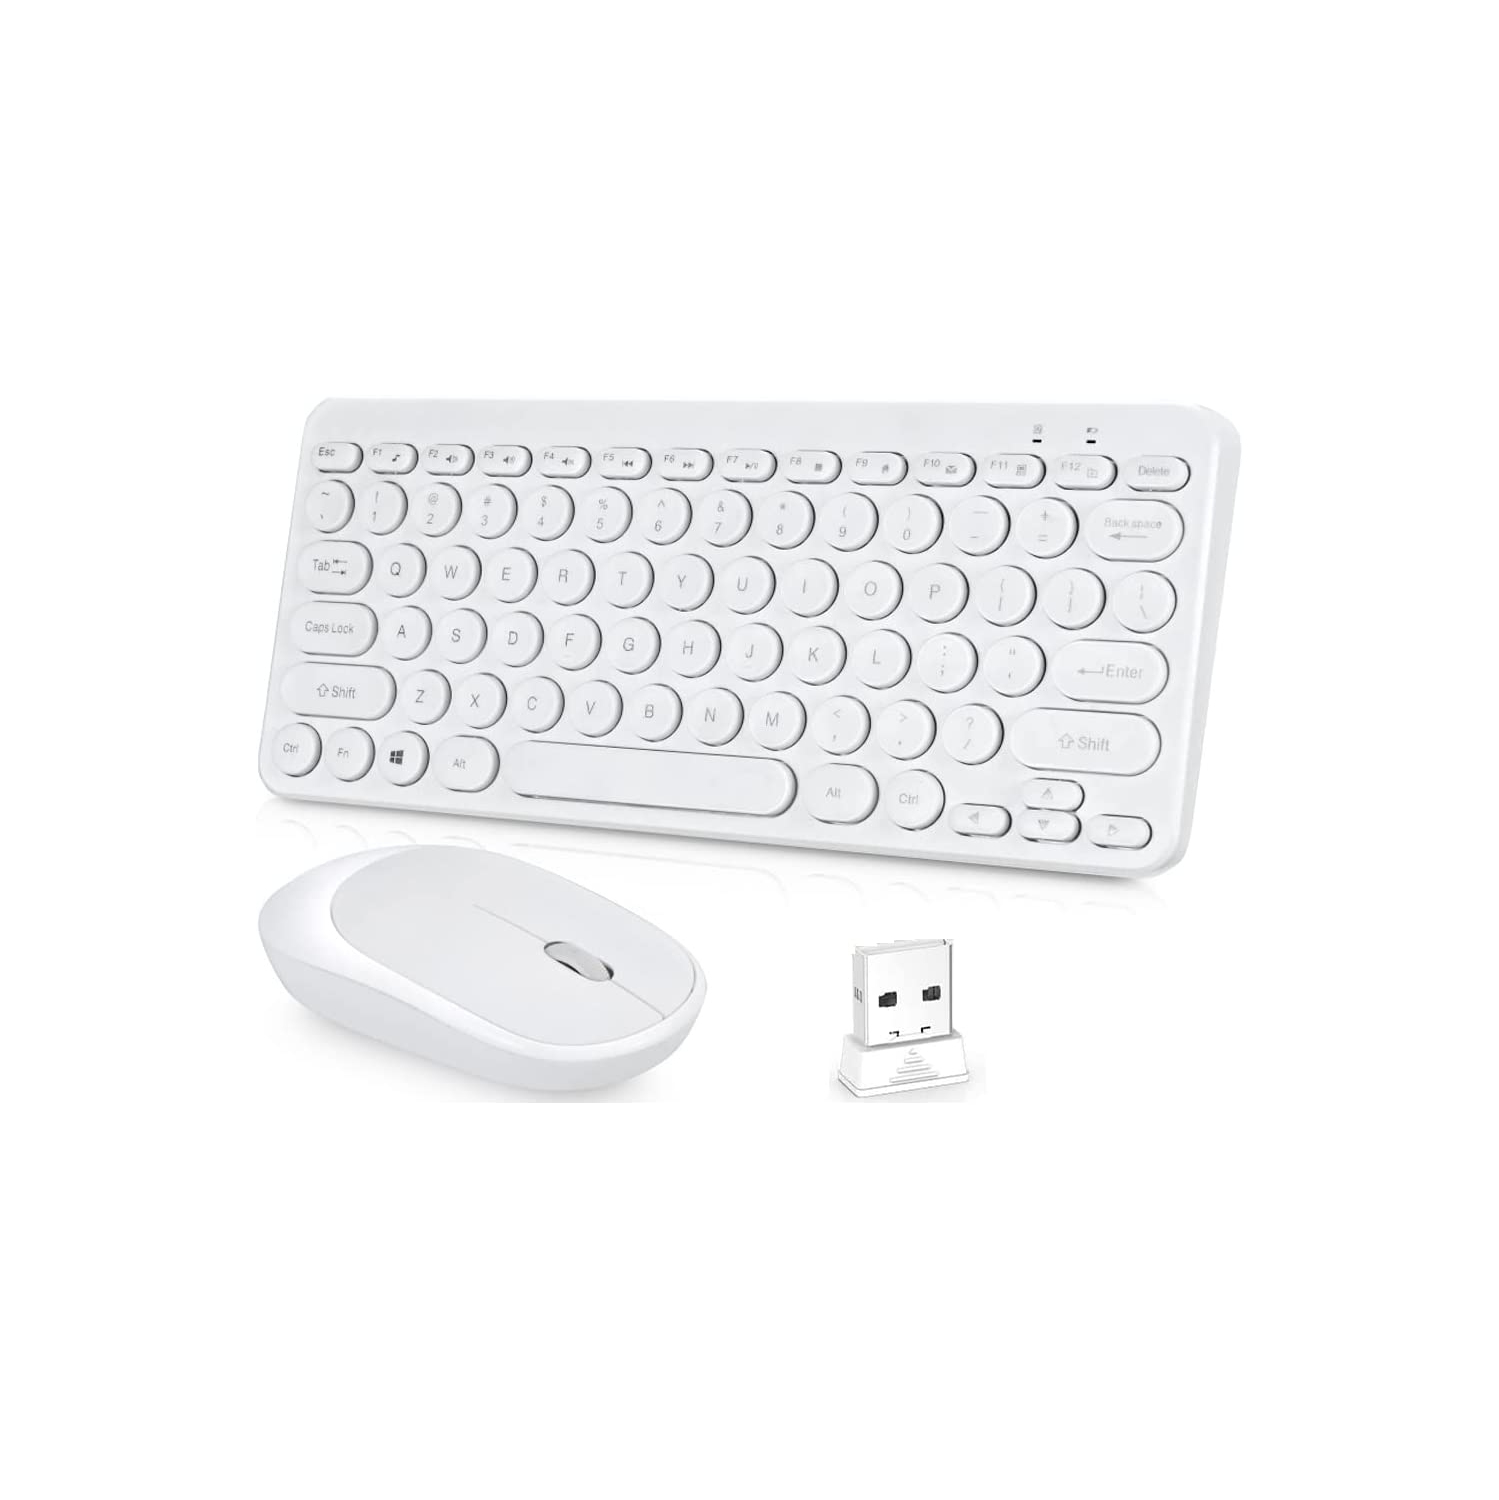 Wireless Keyboard and Mouse, 2.4GHz Portable Mini Wireless Keyboard & Silent Mouse, USB Keyboard for Laptop, PC, Desktop Computer, Windows (White)